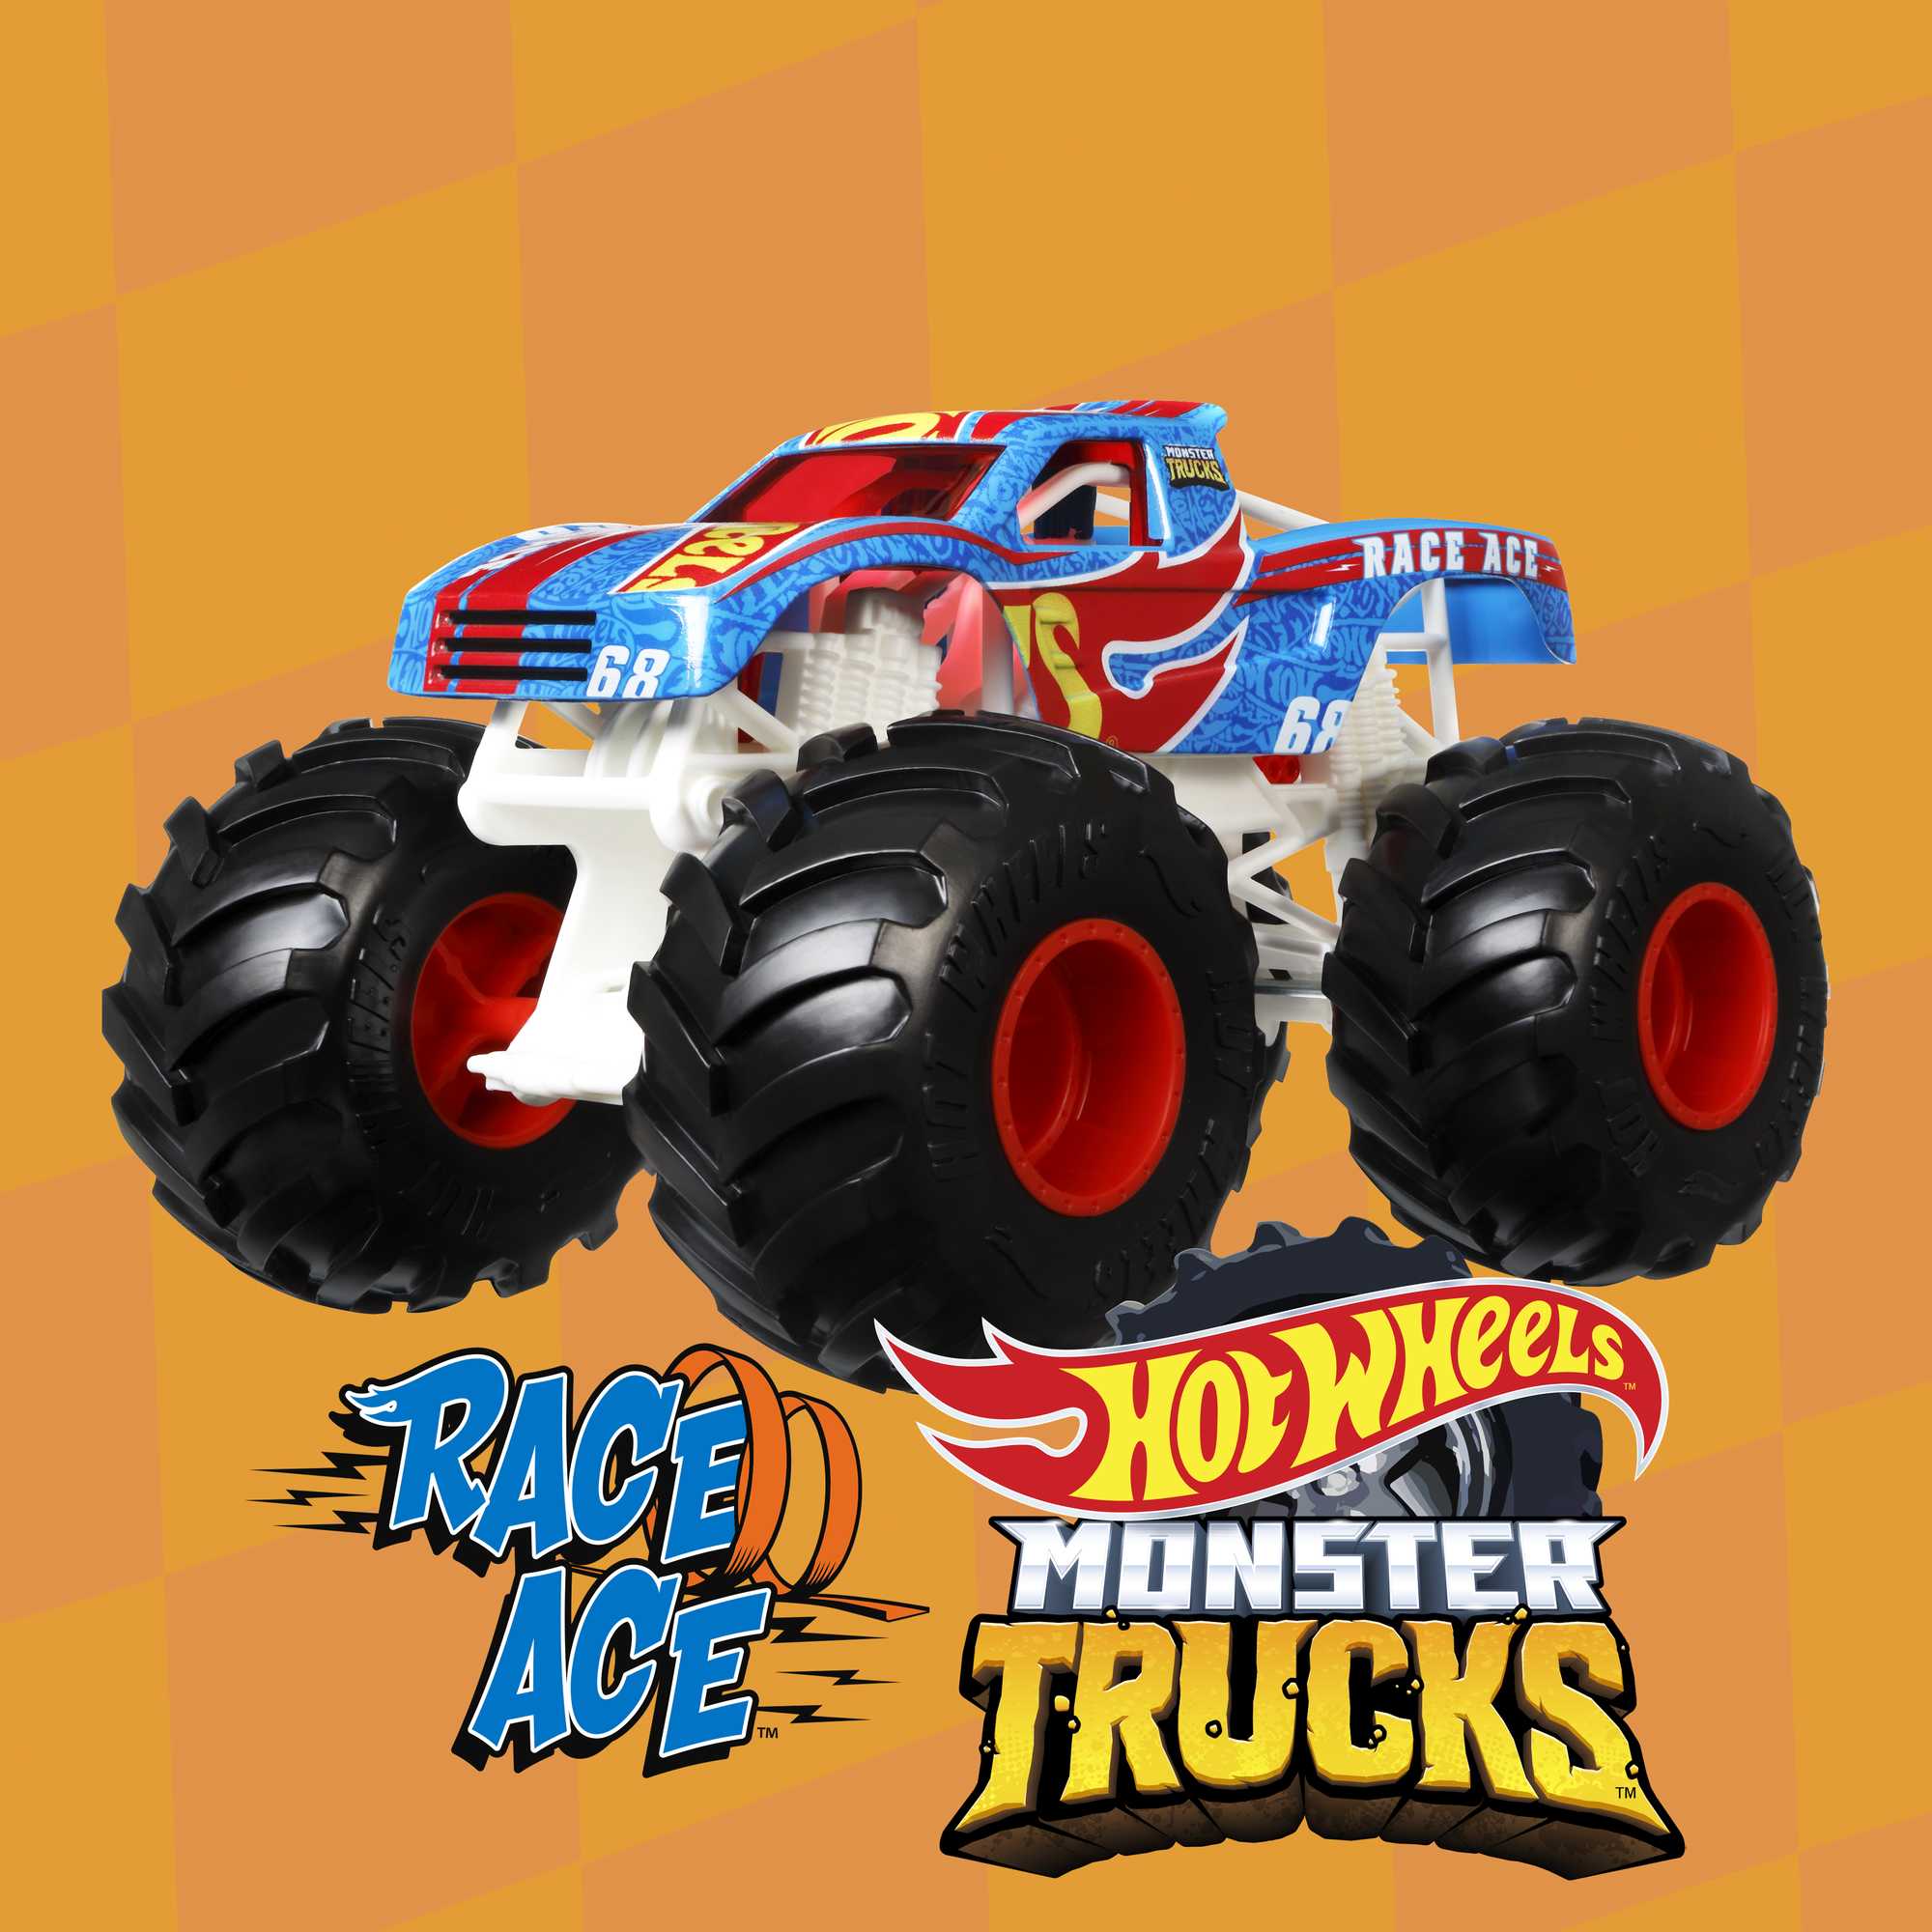 Hot Wheels Monster Trucks Car Chompin' Mega Wrex Vehicle, for Ages 3 Years  & Up 